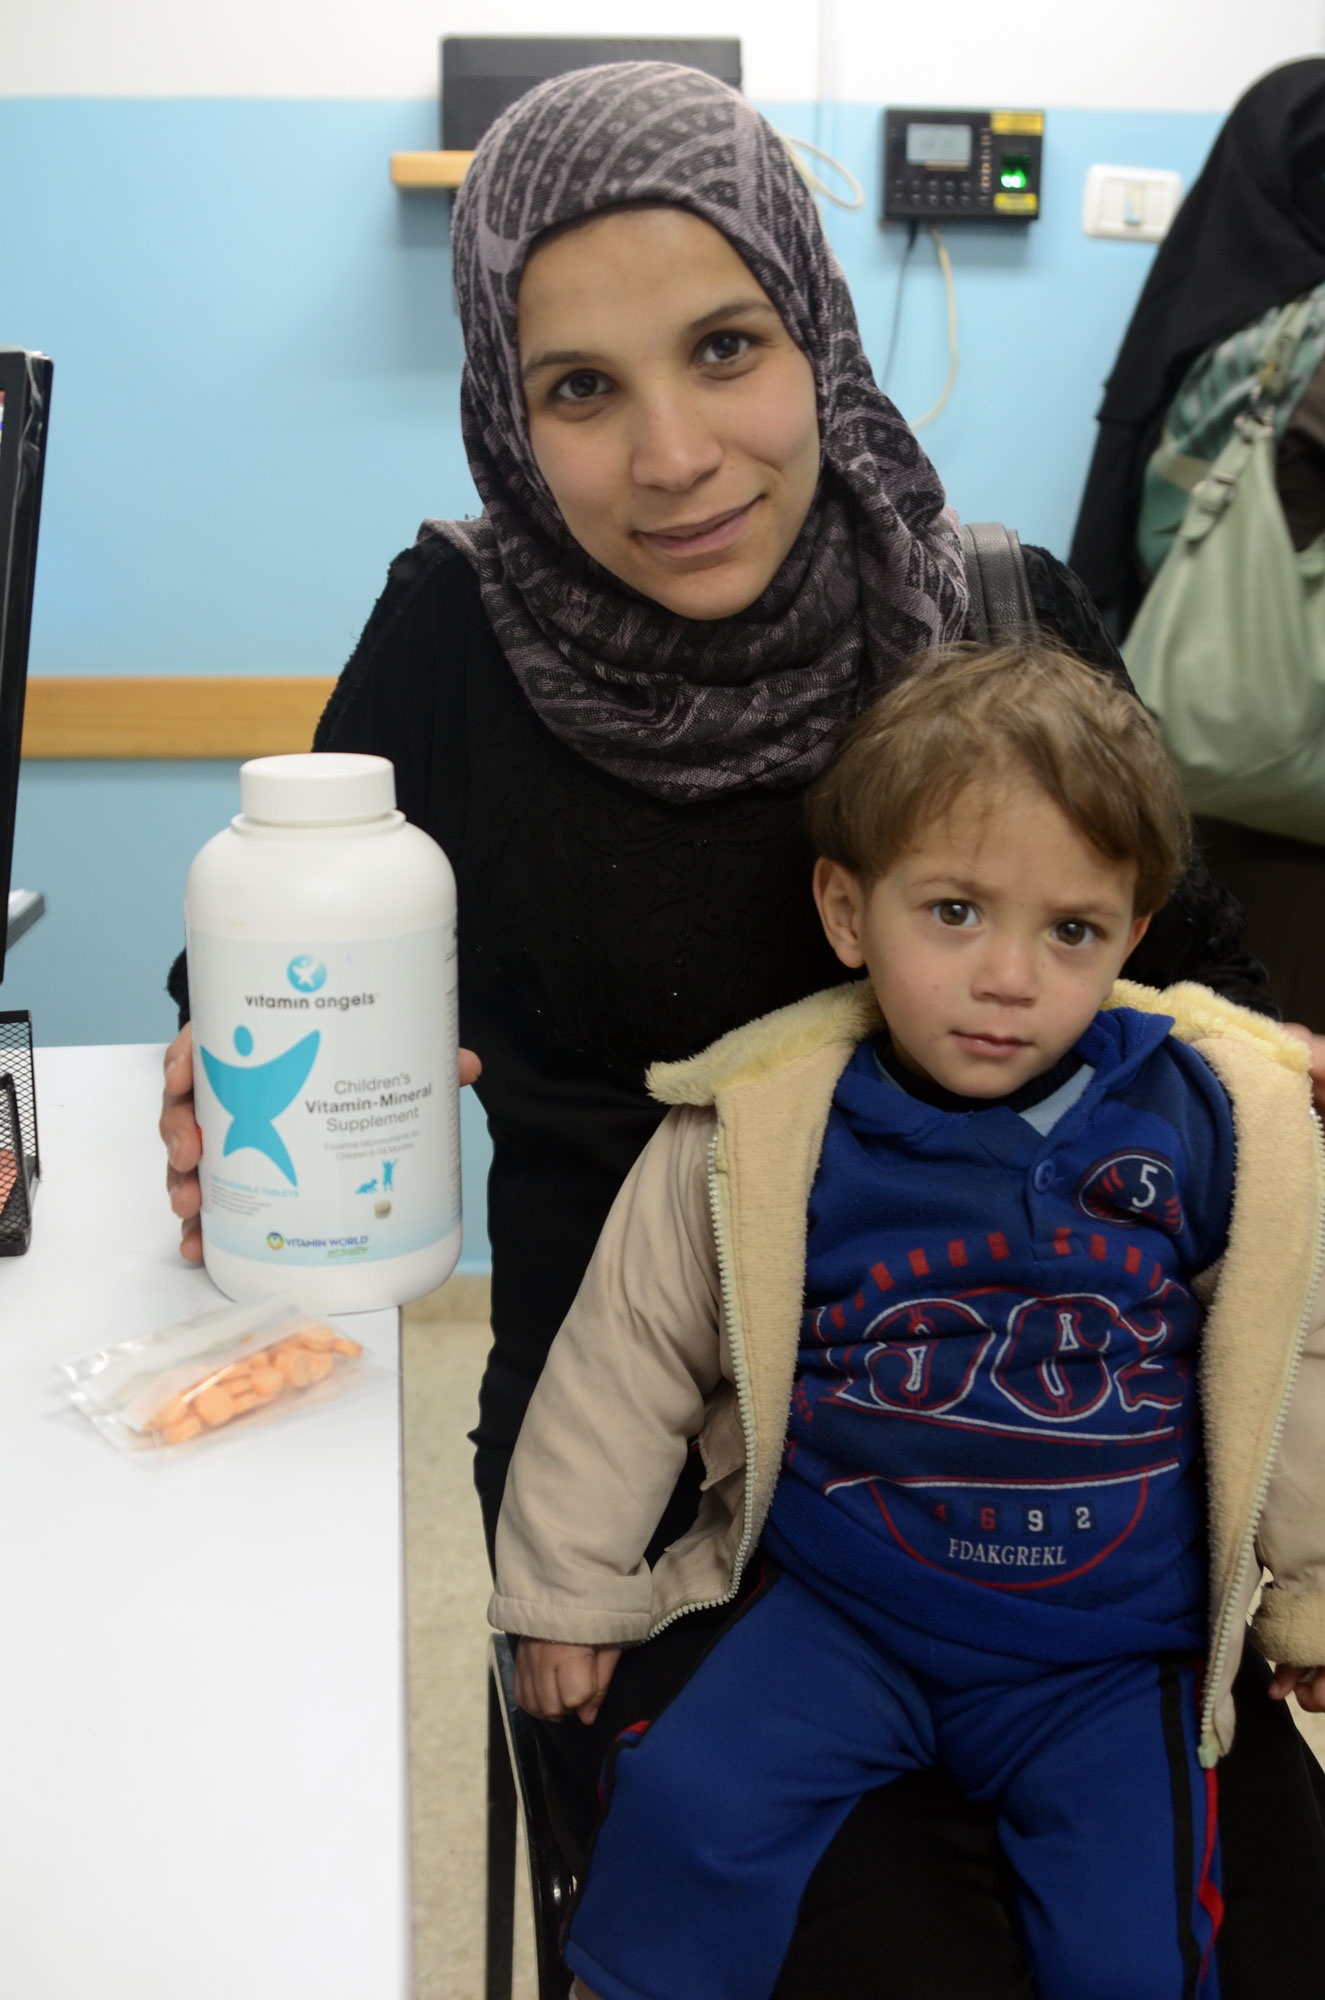 Many Gaza children need multivitamins to combat undernourishment